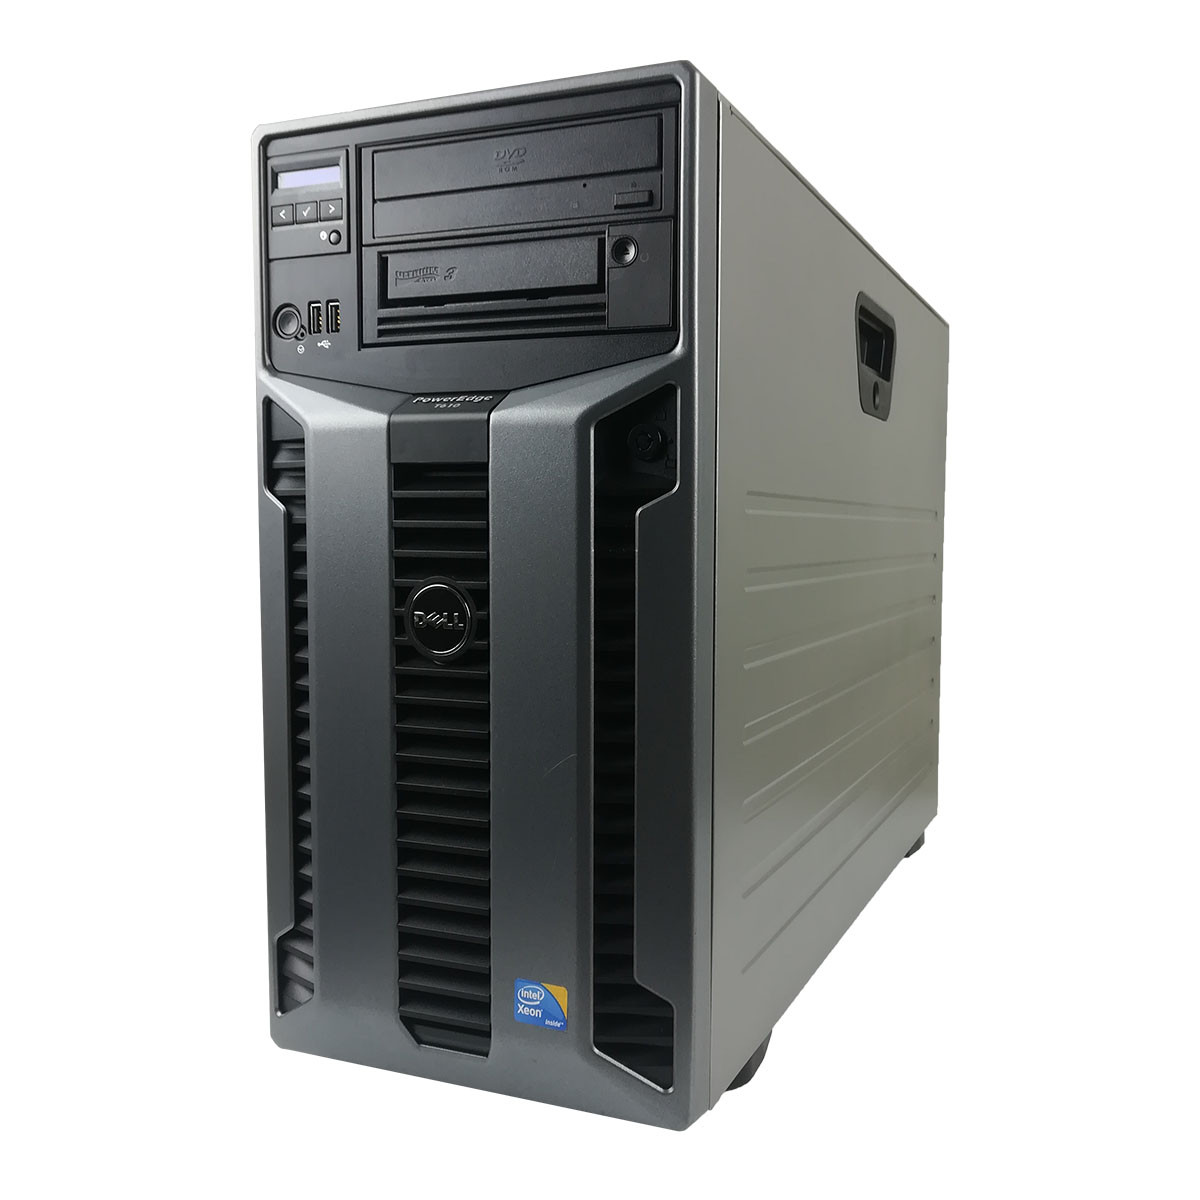 Server Dell PowerEdge T610 Tower, 2 x Intel Xeon Hexa Core X5650 2.66GHz - 3.06GHz, 32GB DDR3-ECC, Raid Perc 6i, 2 x 2TB HDD SATA, DVD-ROM, Idrac 6 Enterprise, 2 PSU Hot Swap